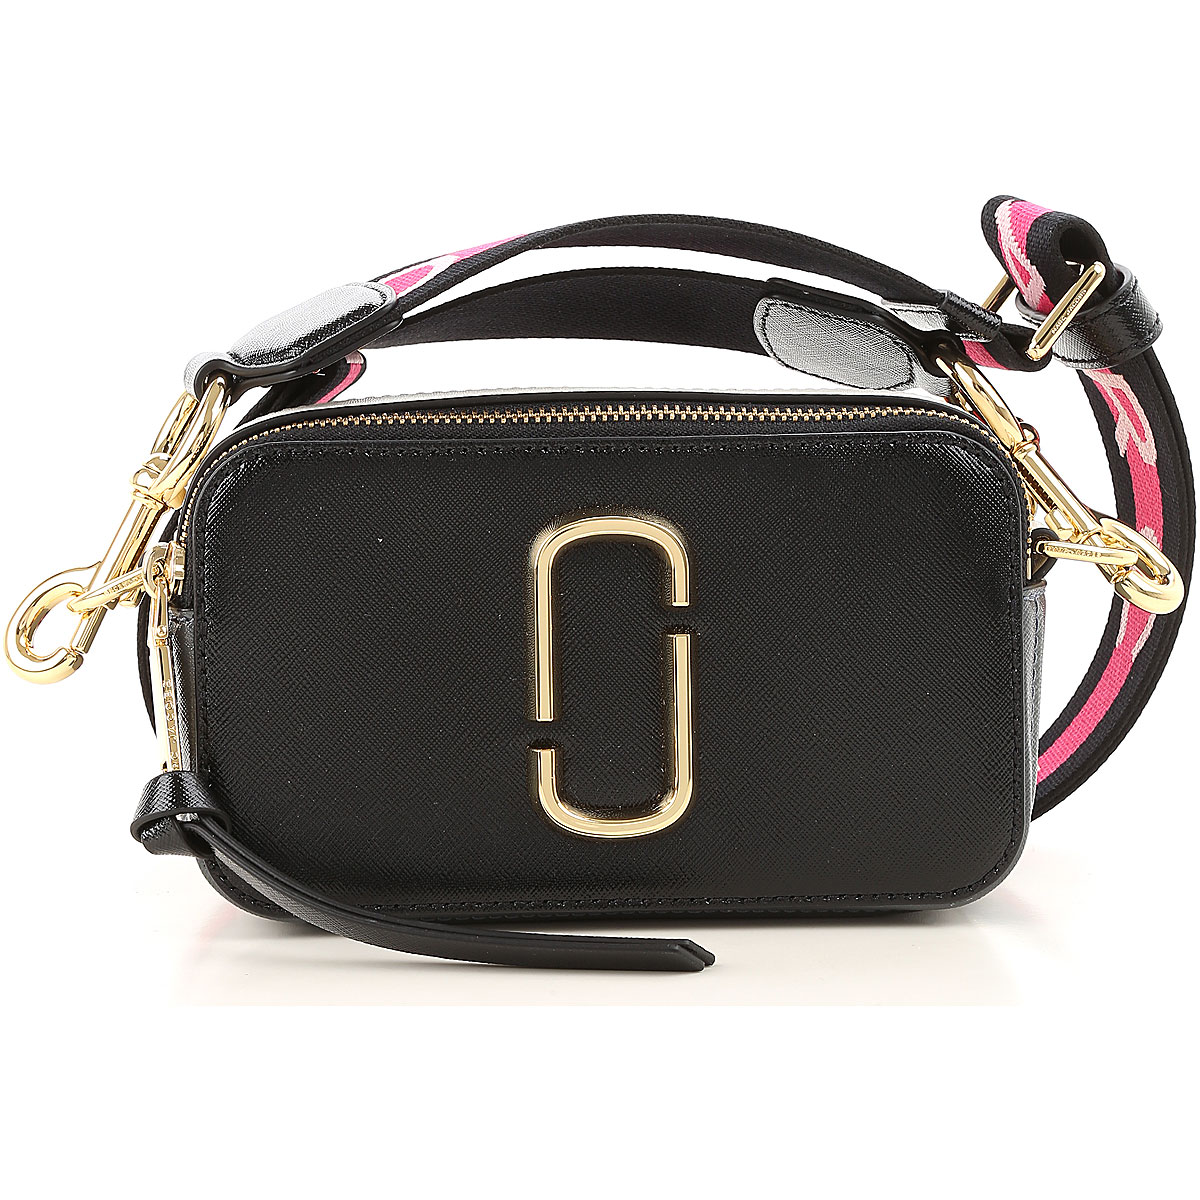 Handbags Marc Jacobs, Style code: m0014146-002-A984